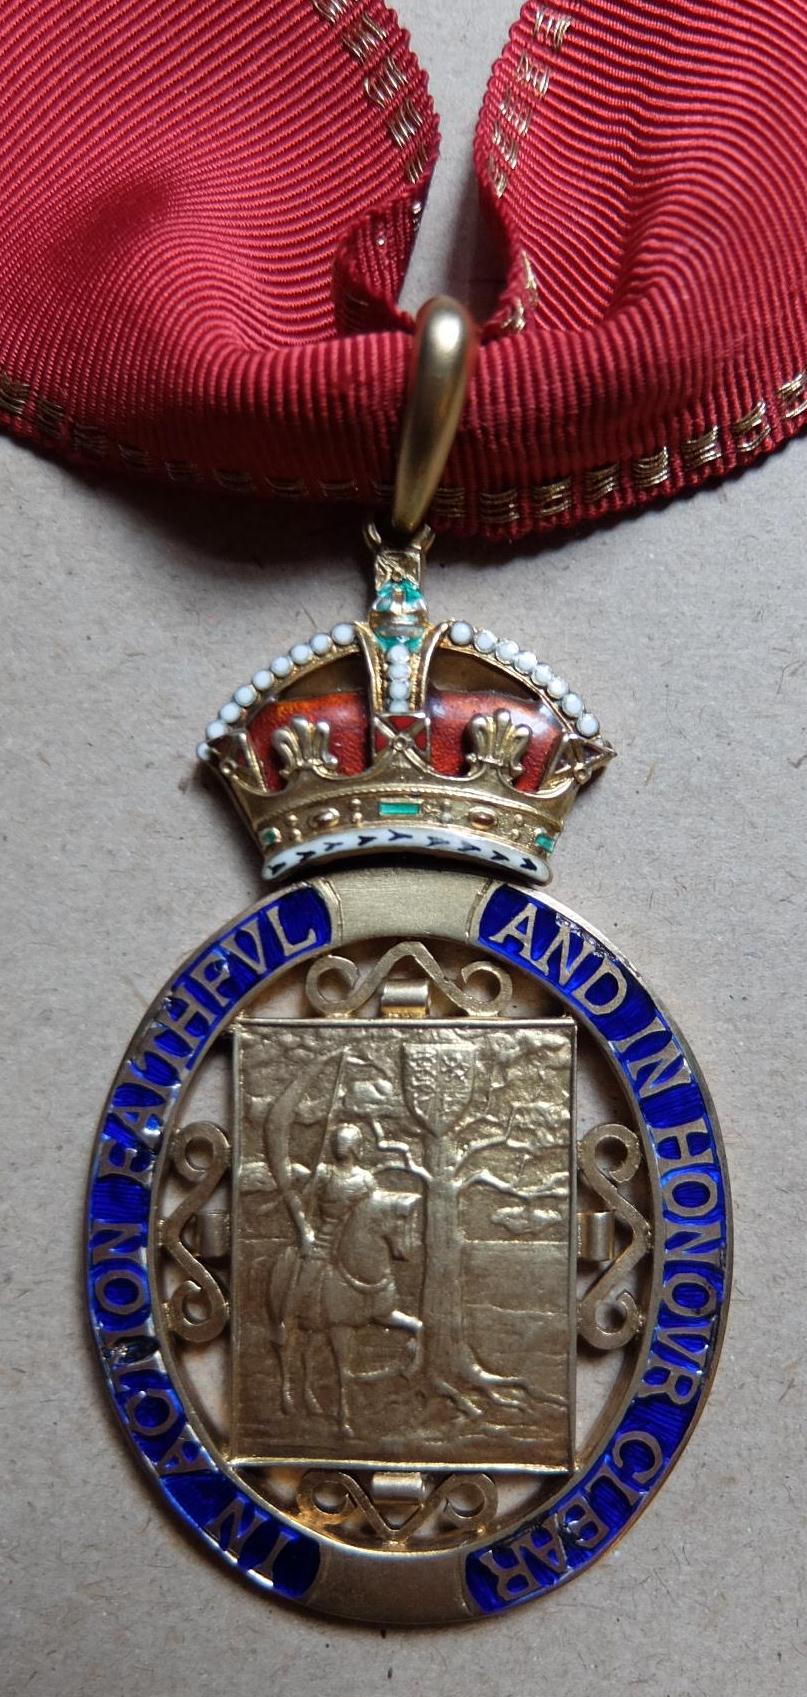 Companions of Honour badge